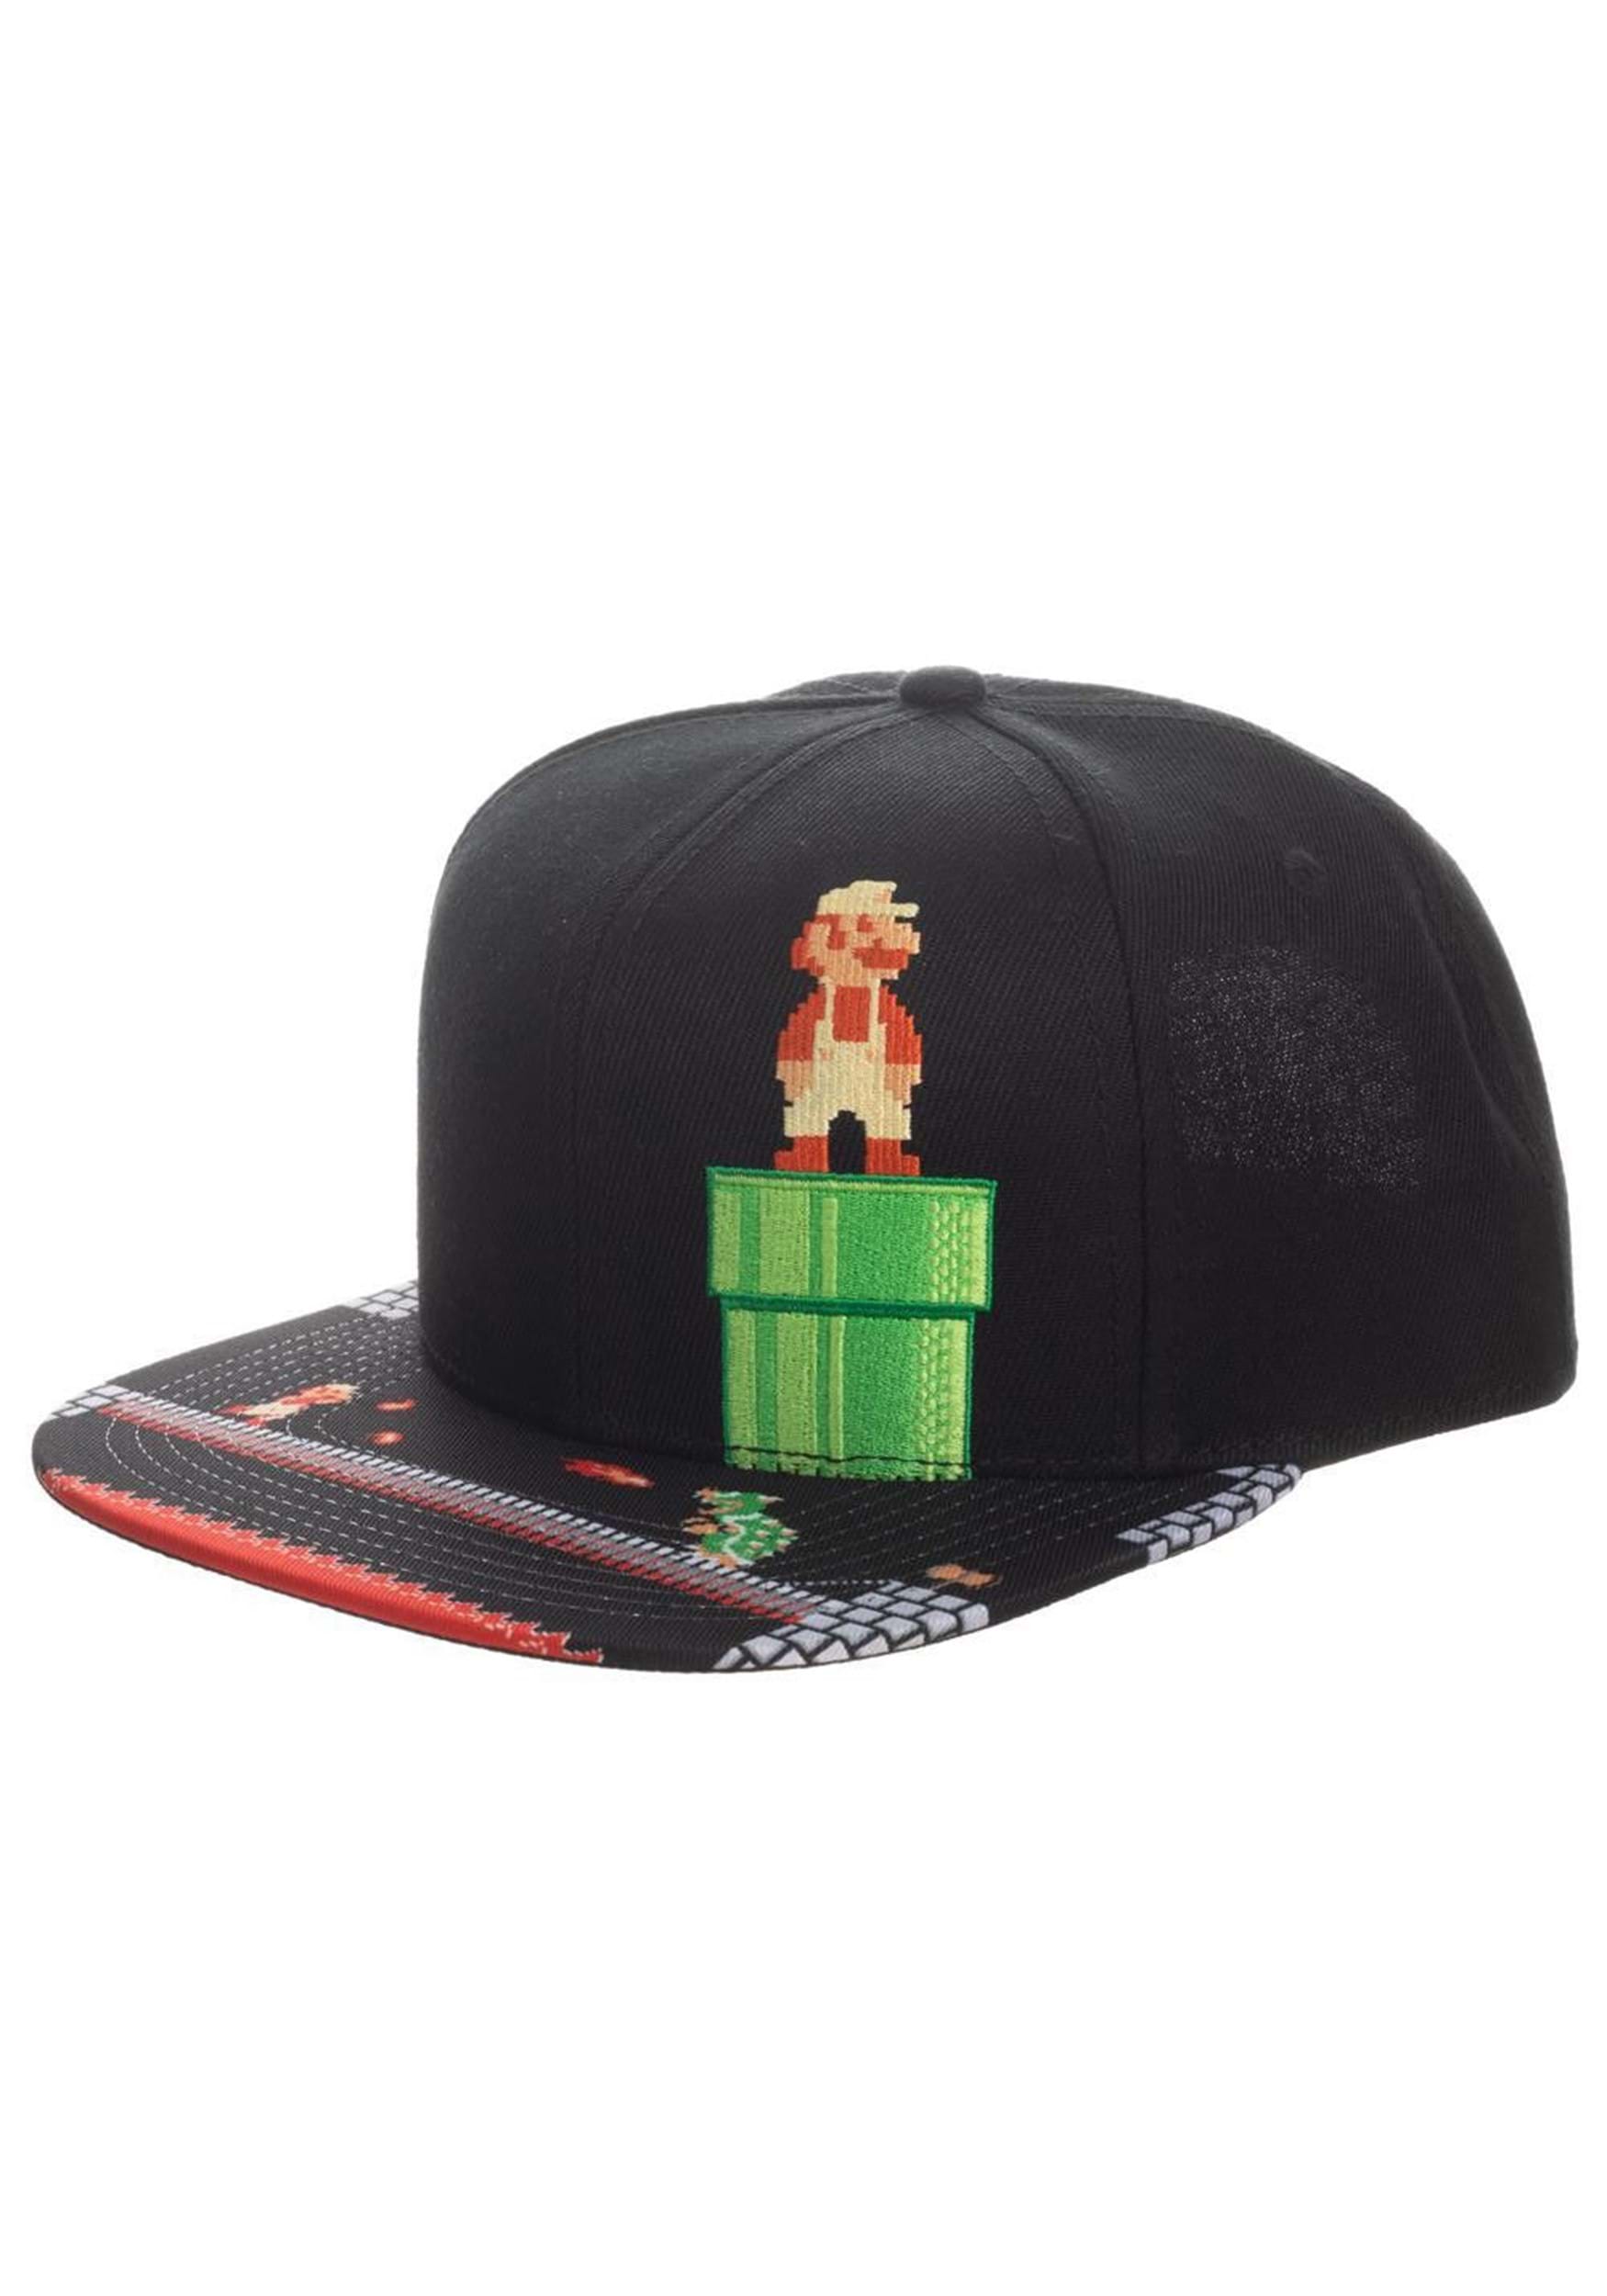 Super Mario Classic 8-Bit Flat Bill Snapback Hat